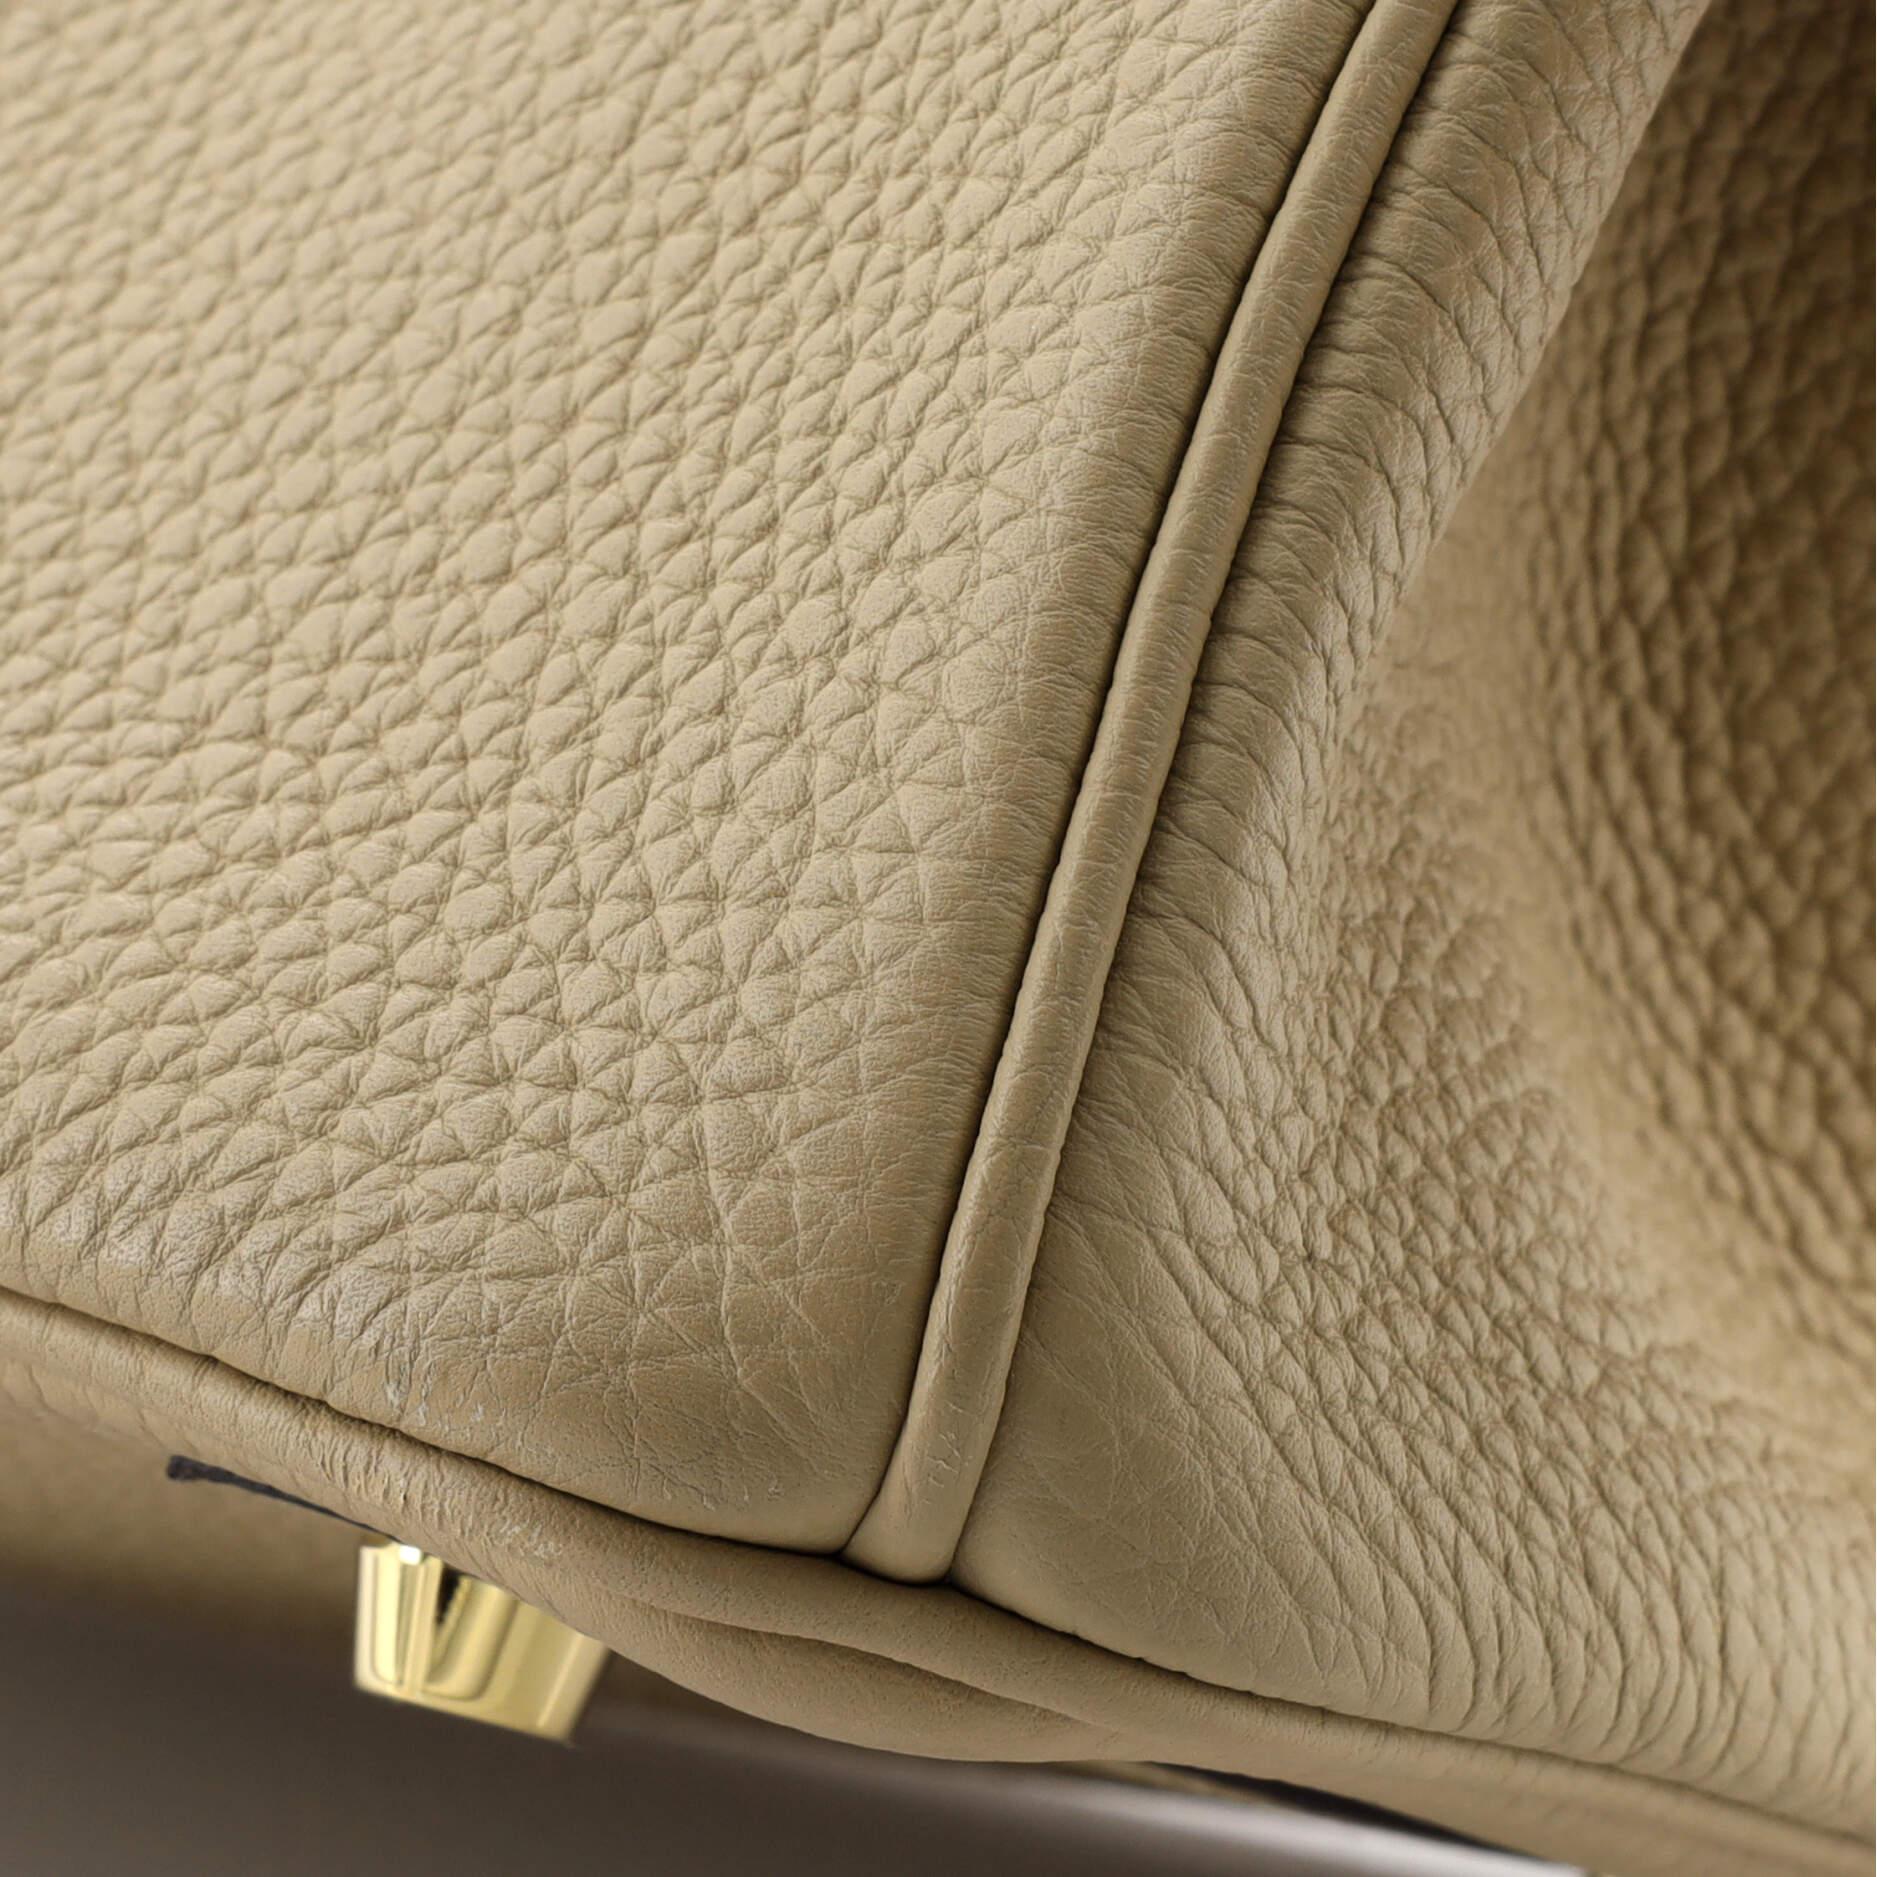 Hermes Birkin Handbag Light Togo with Gold Hardware 30 4